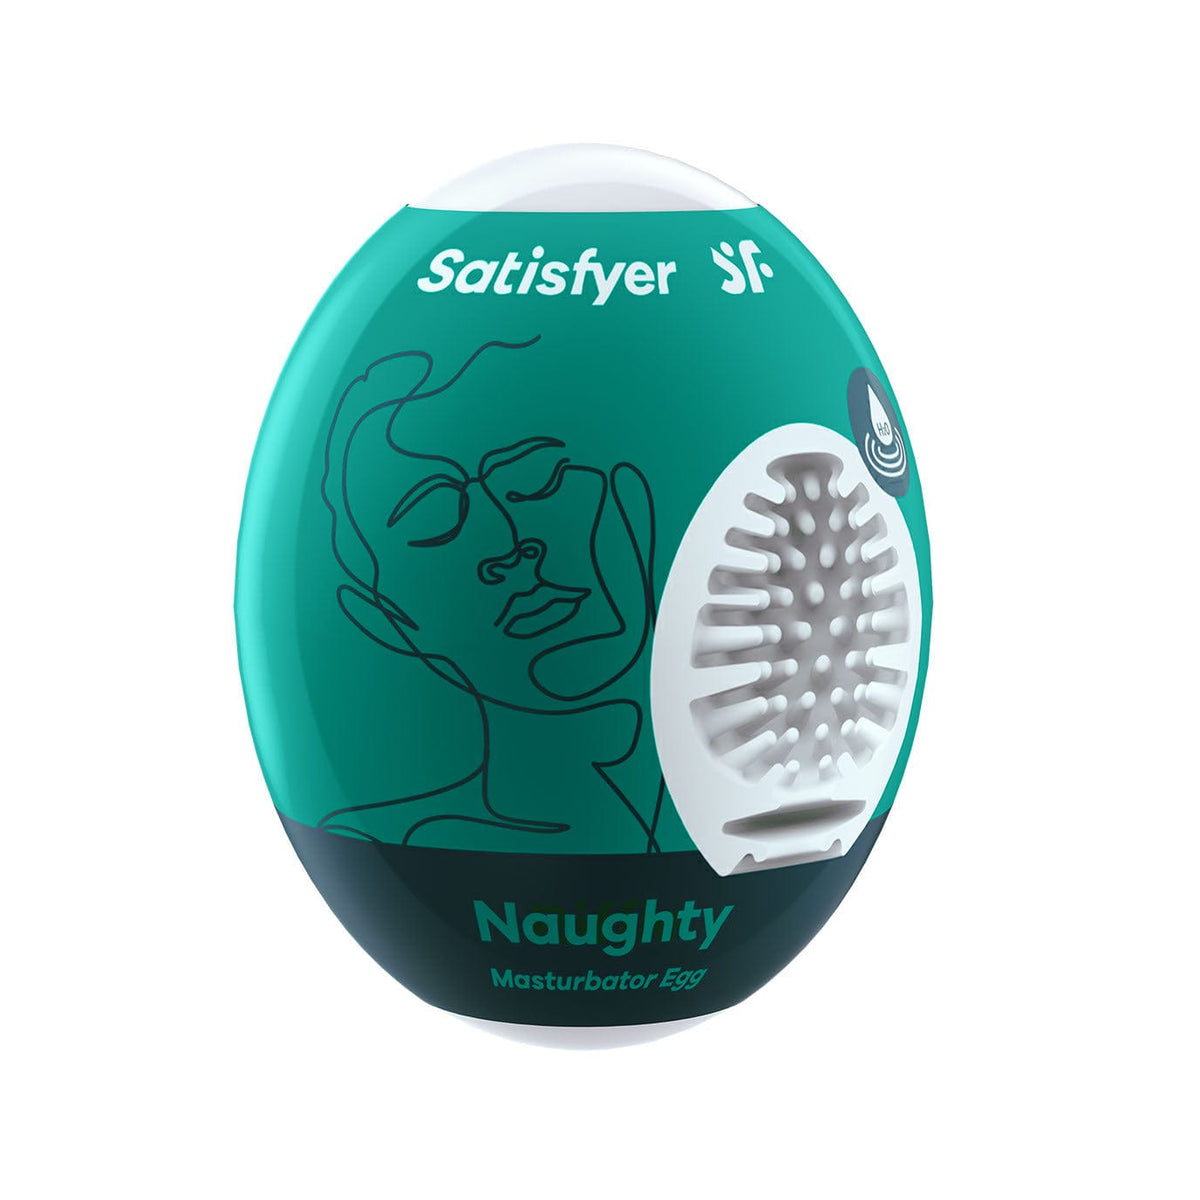 Satisfyer - Crunchy Masturbator Egg (Green) -  Masturbator Egg (Non Vibration)  Durio.sg